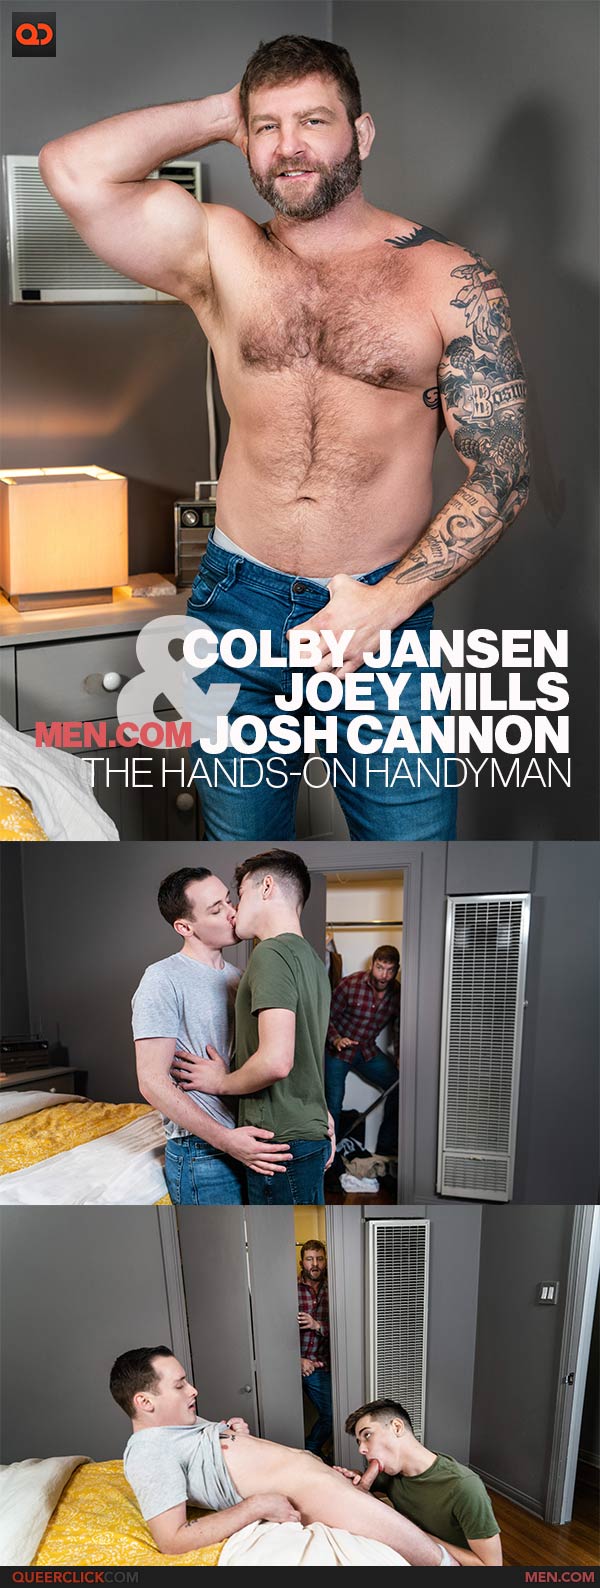 Men.com: Colby Jansen, Joey Mills and Josh Cannon